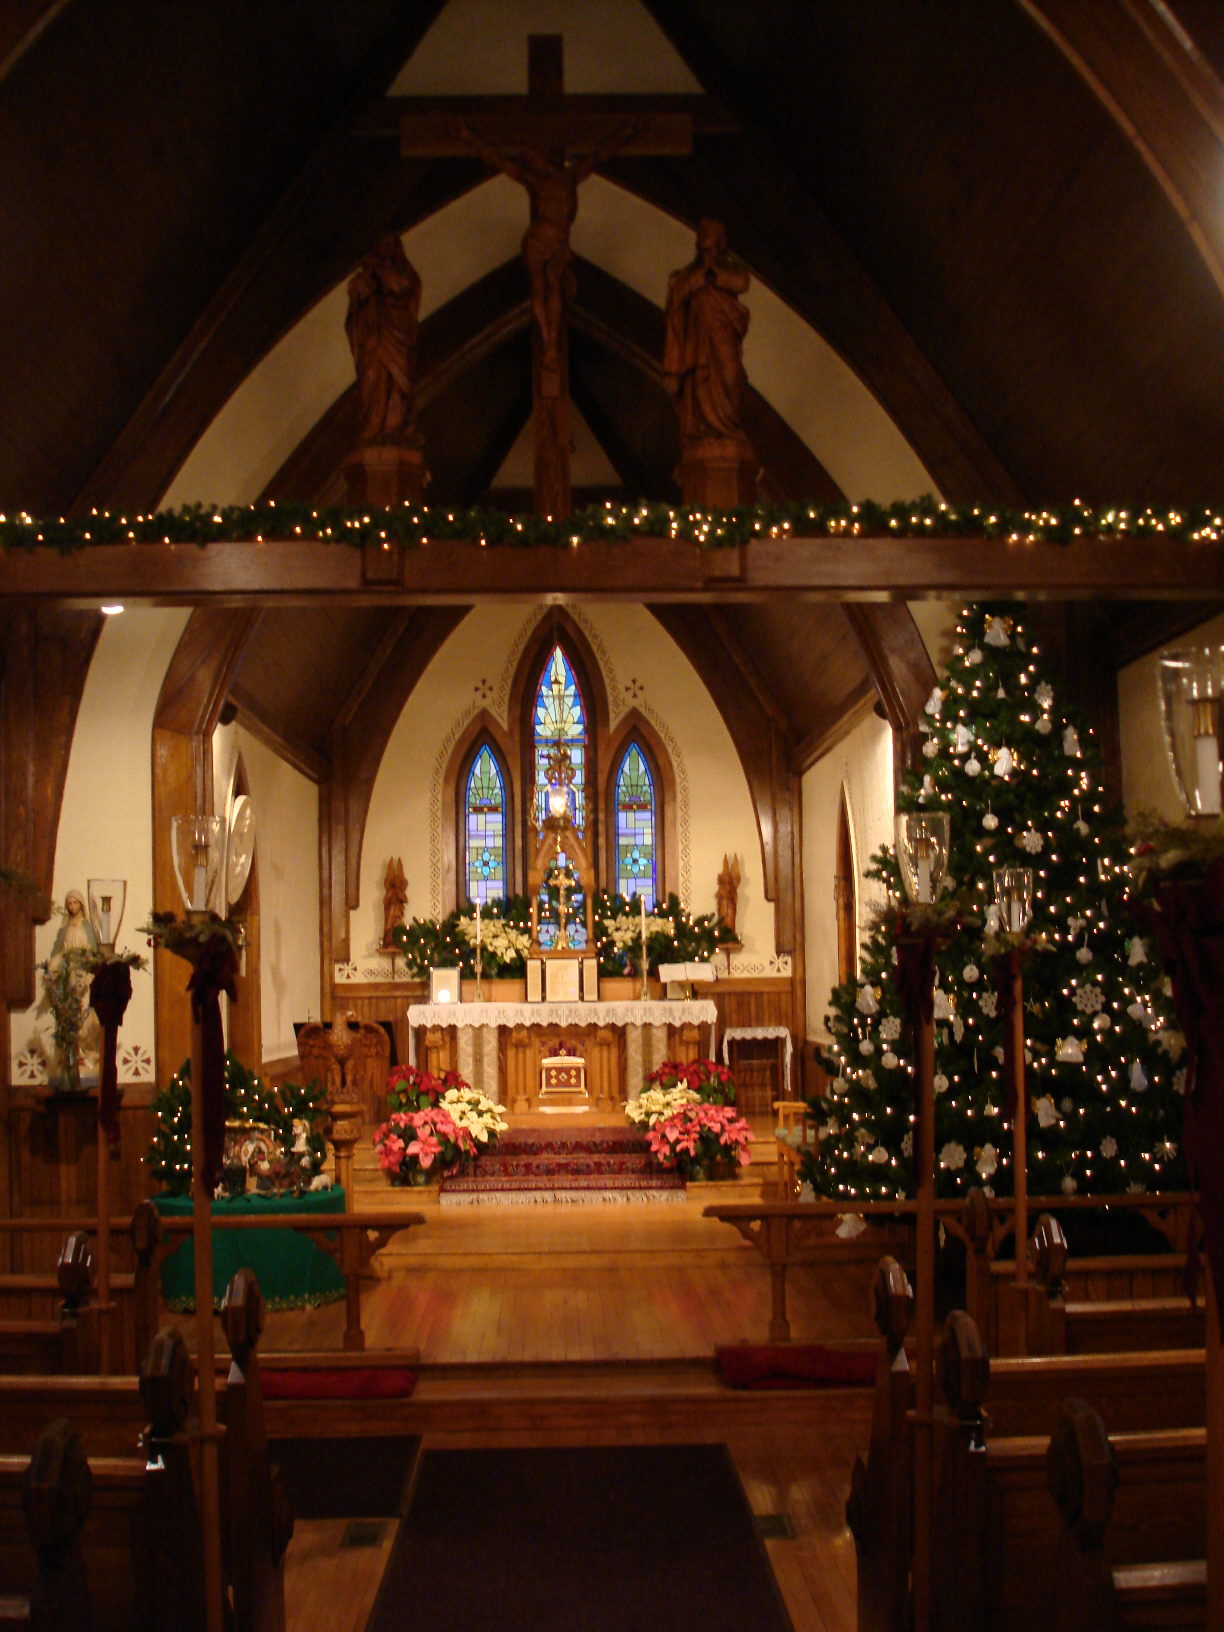 File:St Agnes Church, Algoma WI, interior at Christmas.jpg - Wikipedia